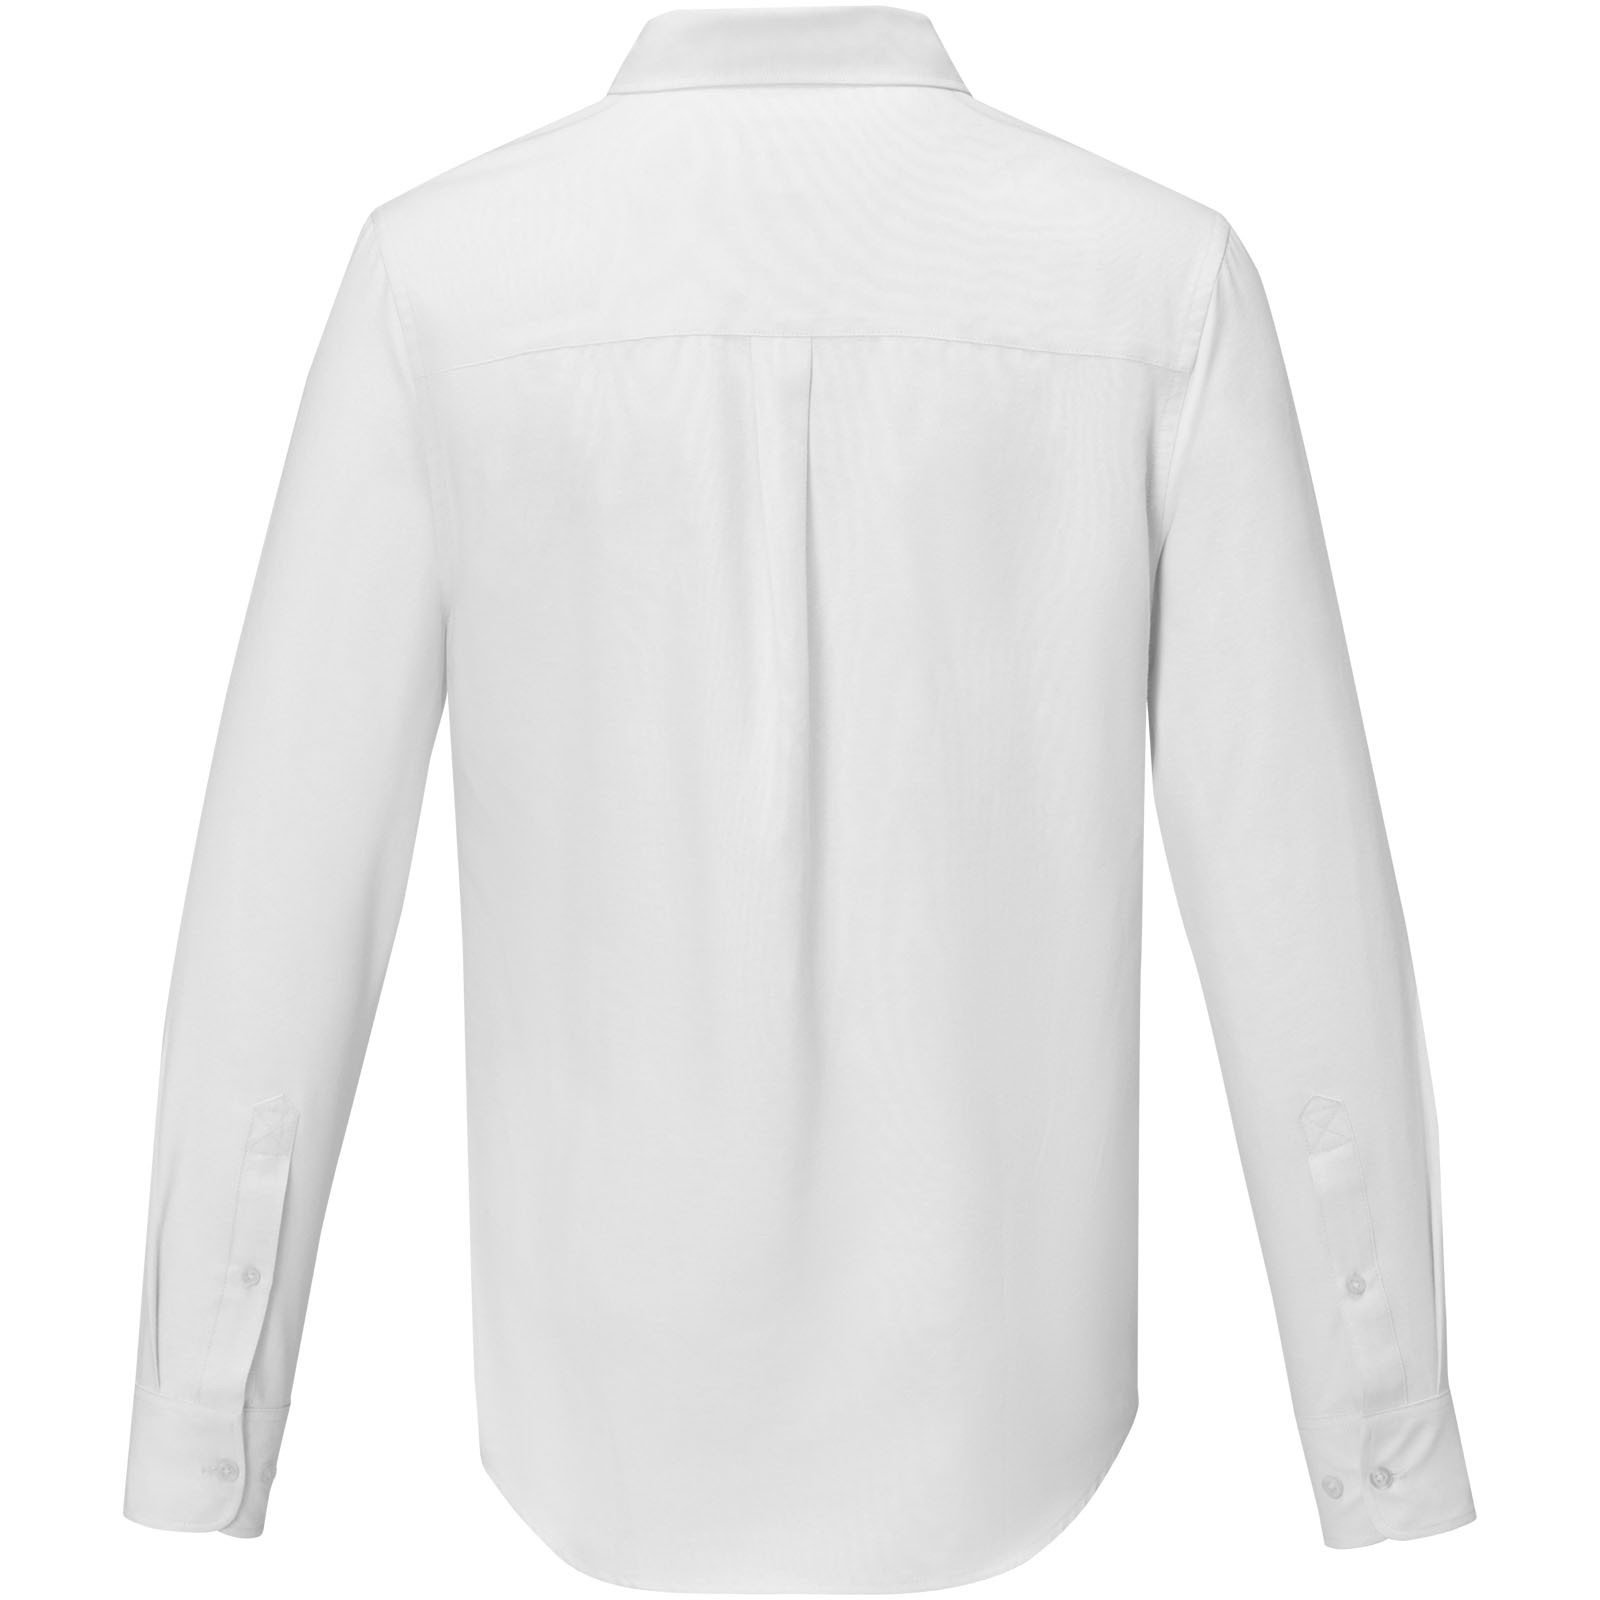 Advertising Shirts - Pollux long sleeve men's shirt - 2